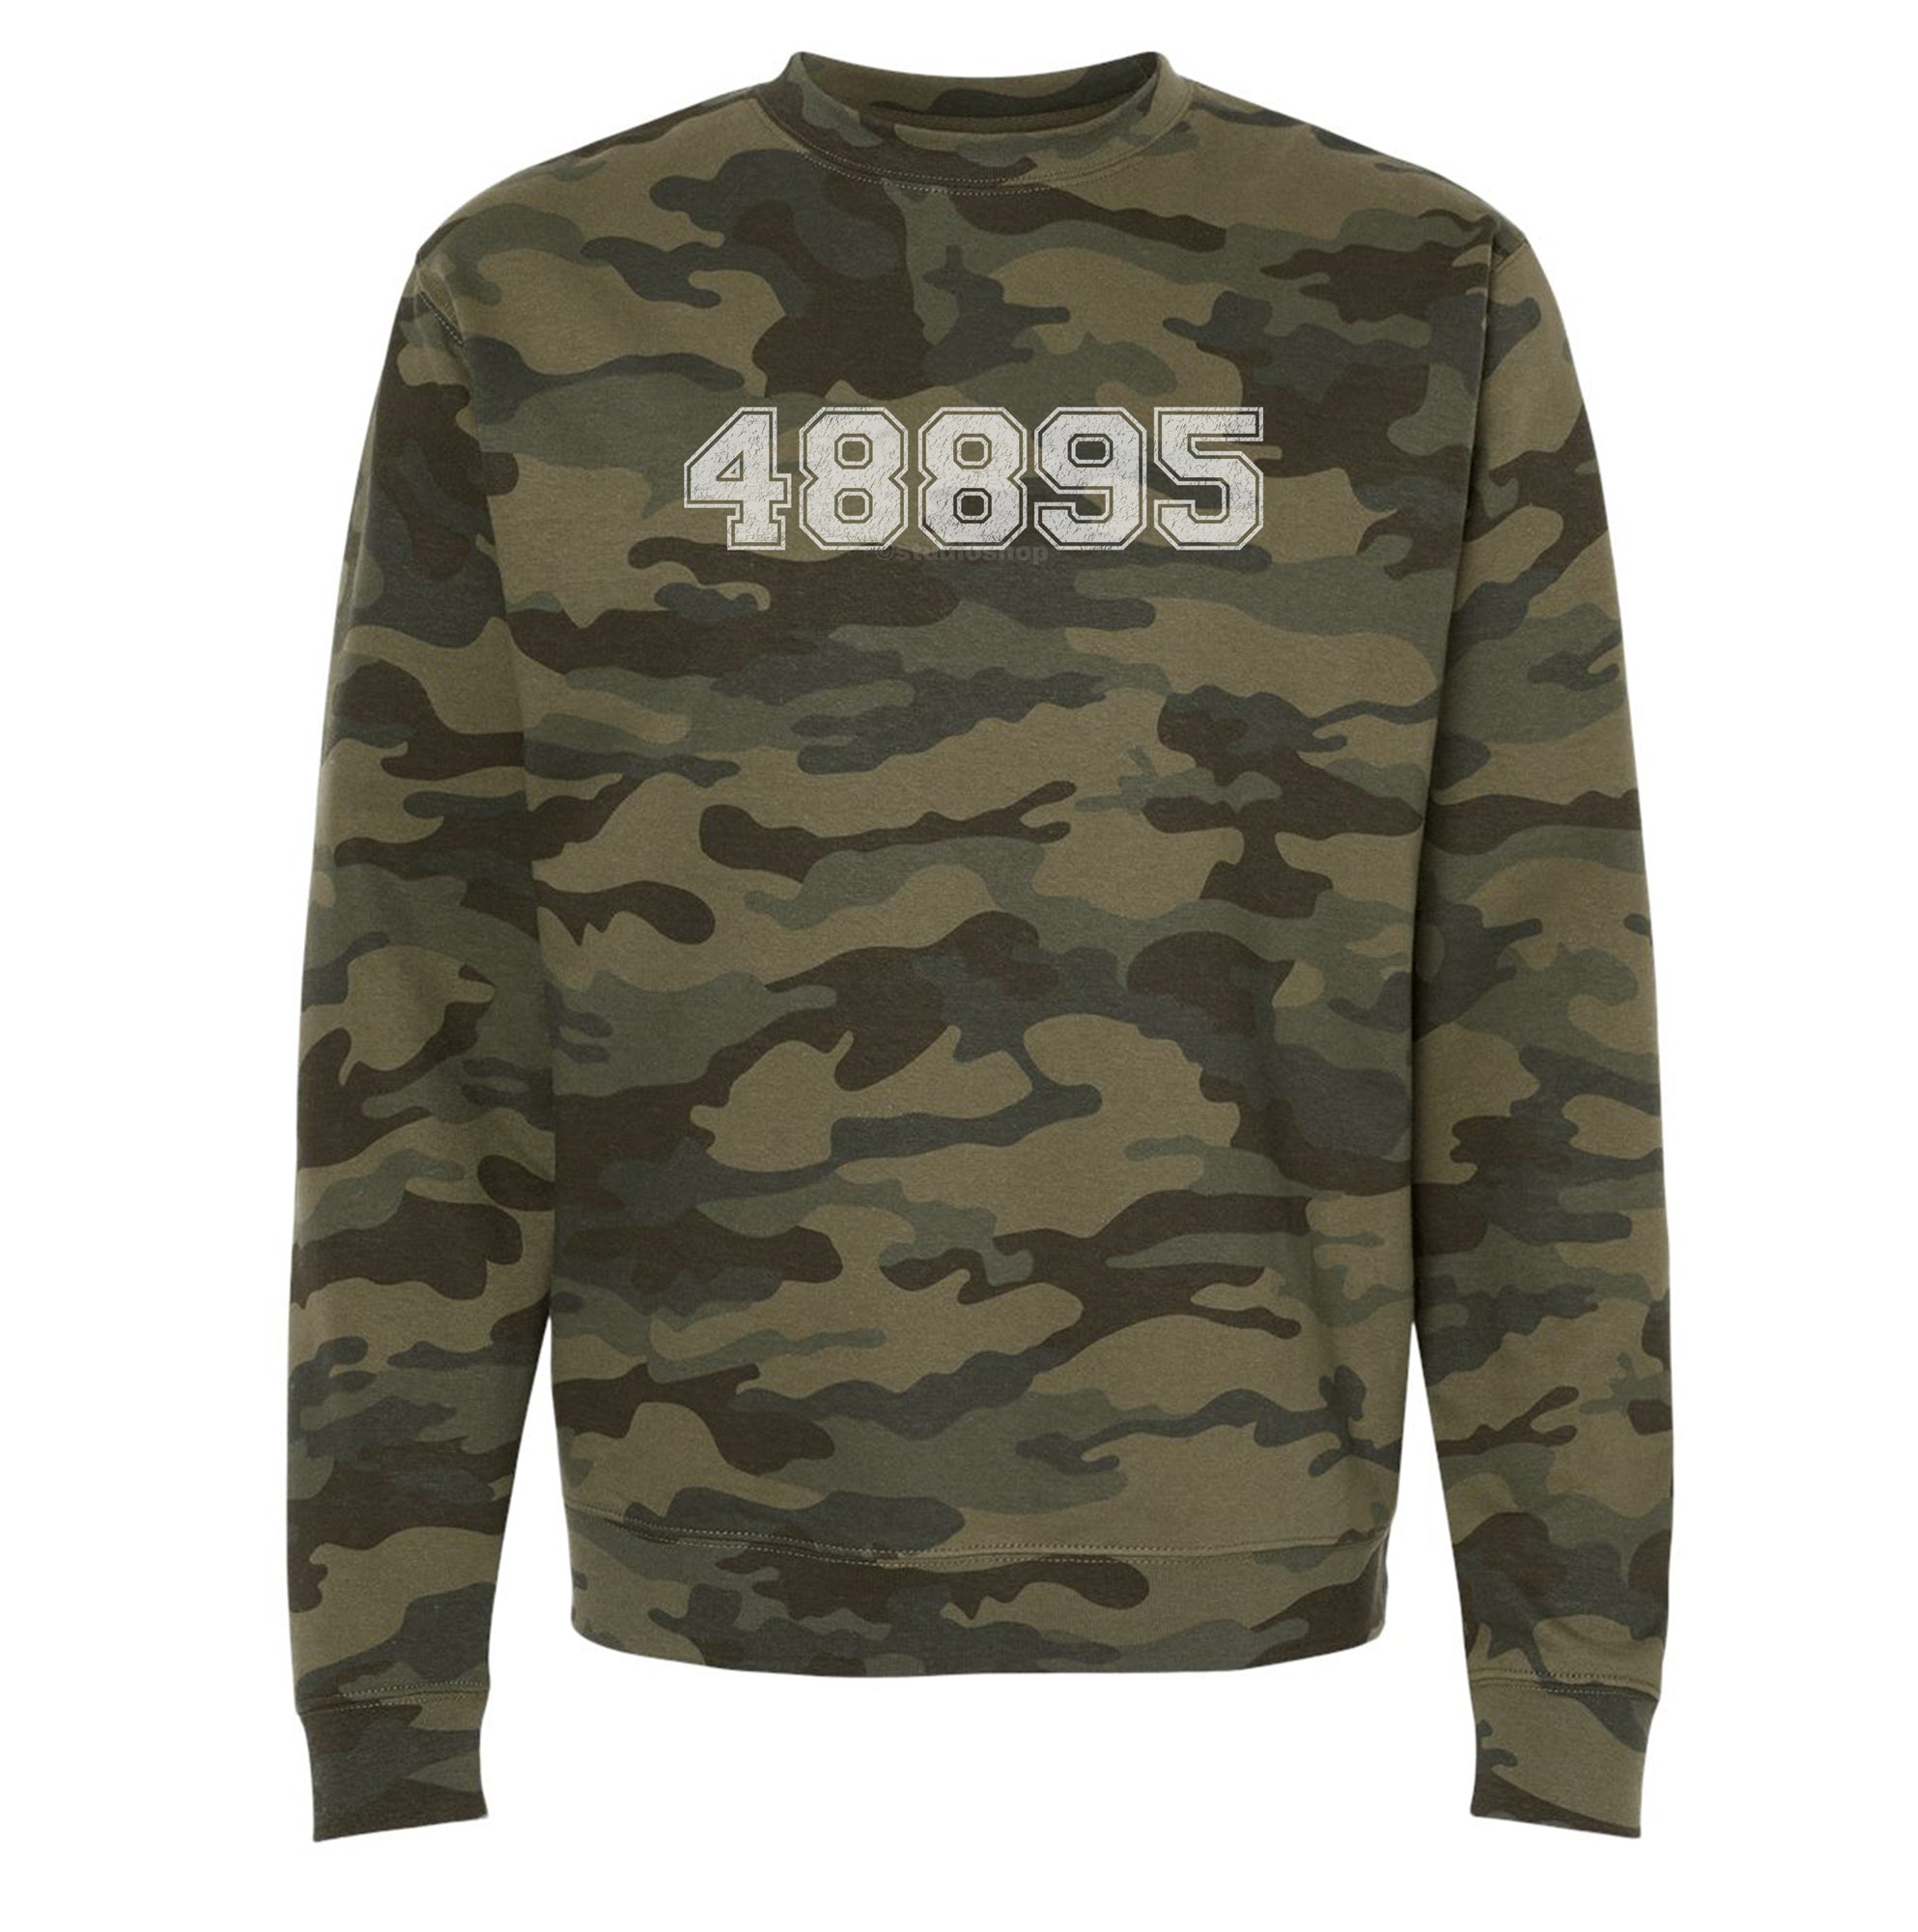 "48895" - Vintage - Adult Comfy Sweatshirt